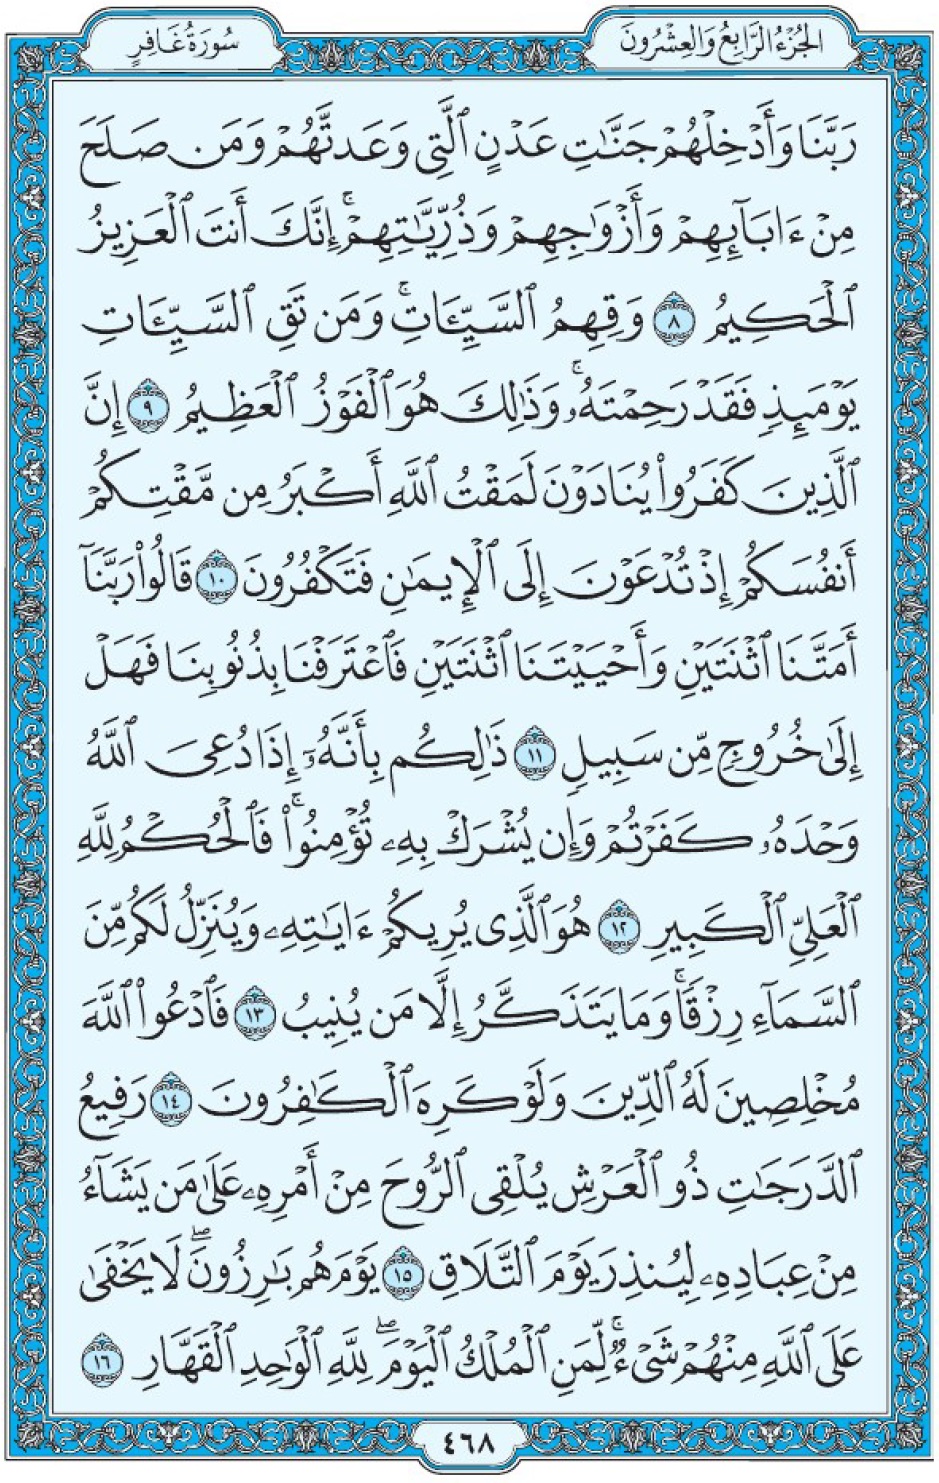 Коран Мединский мусхаф страница 468, Гафир, аят 8-16